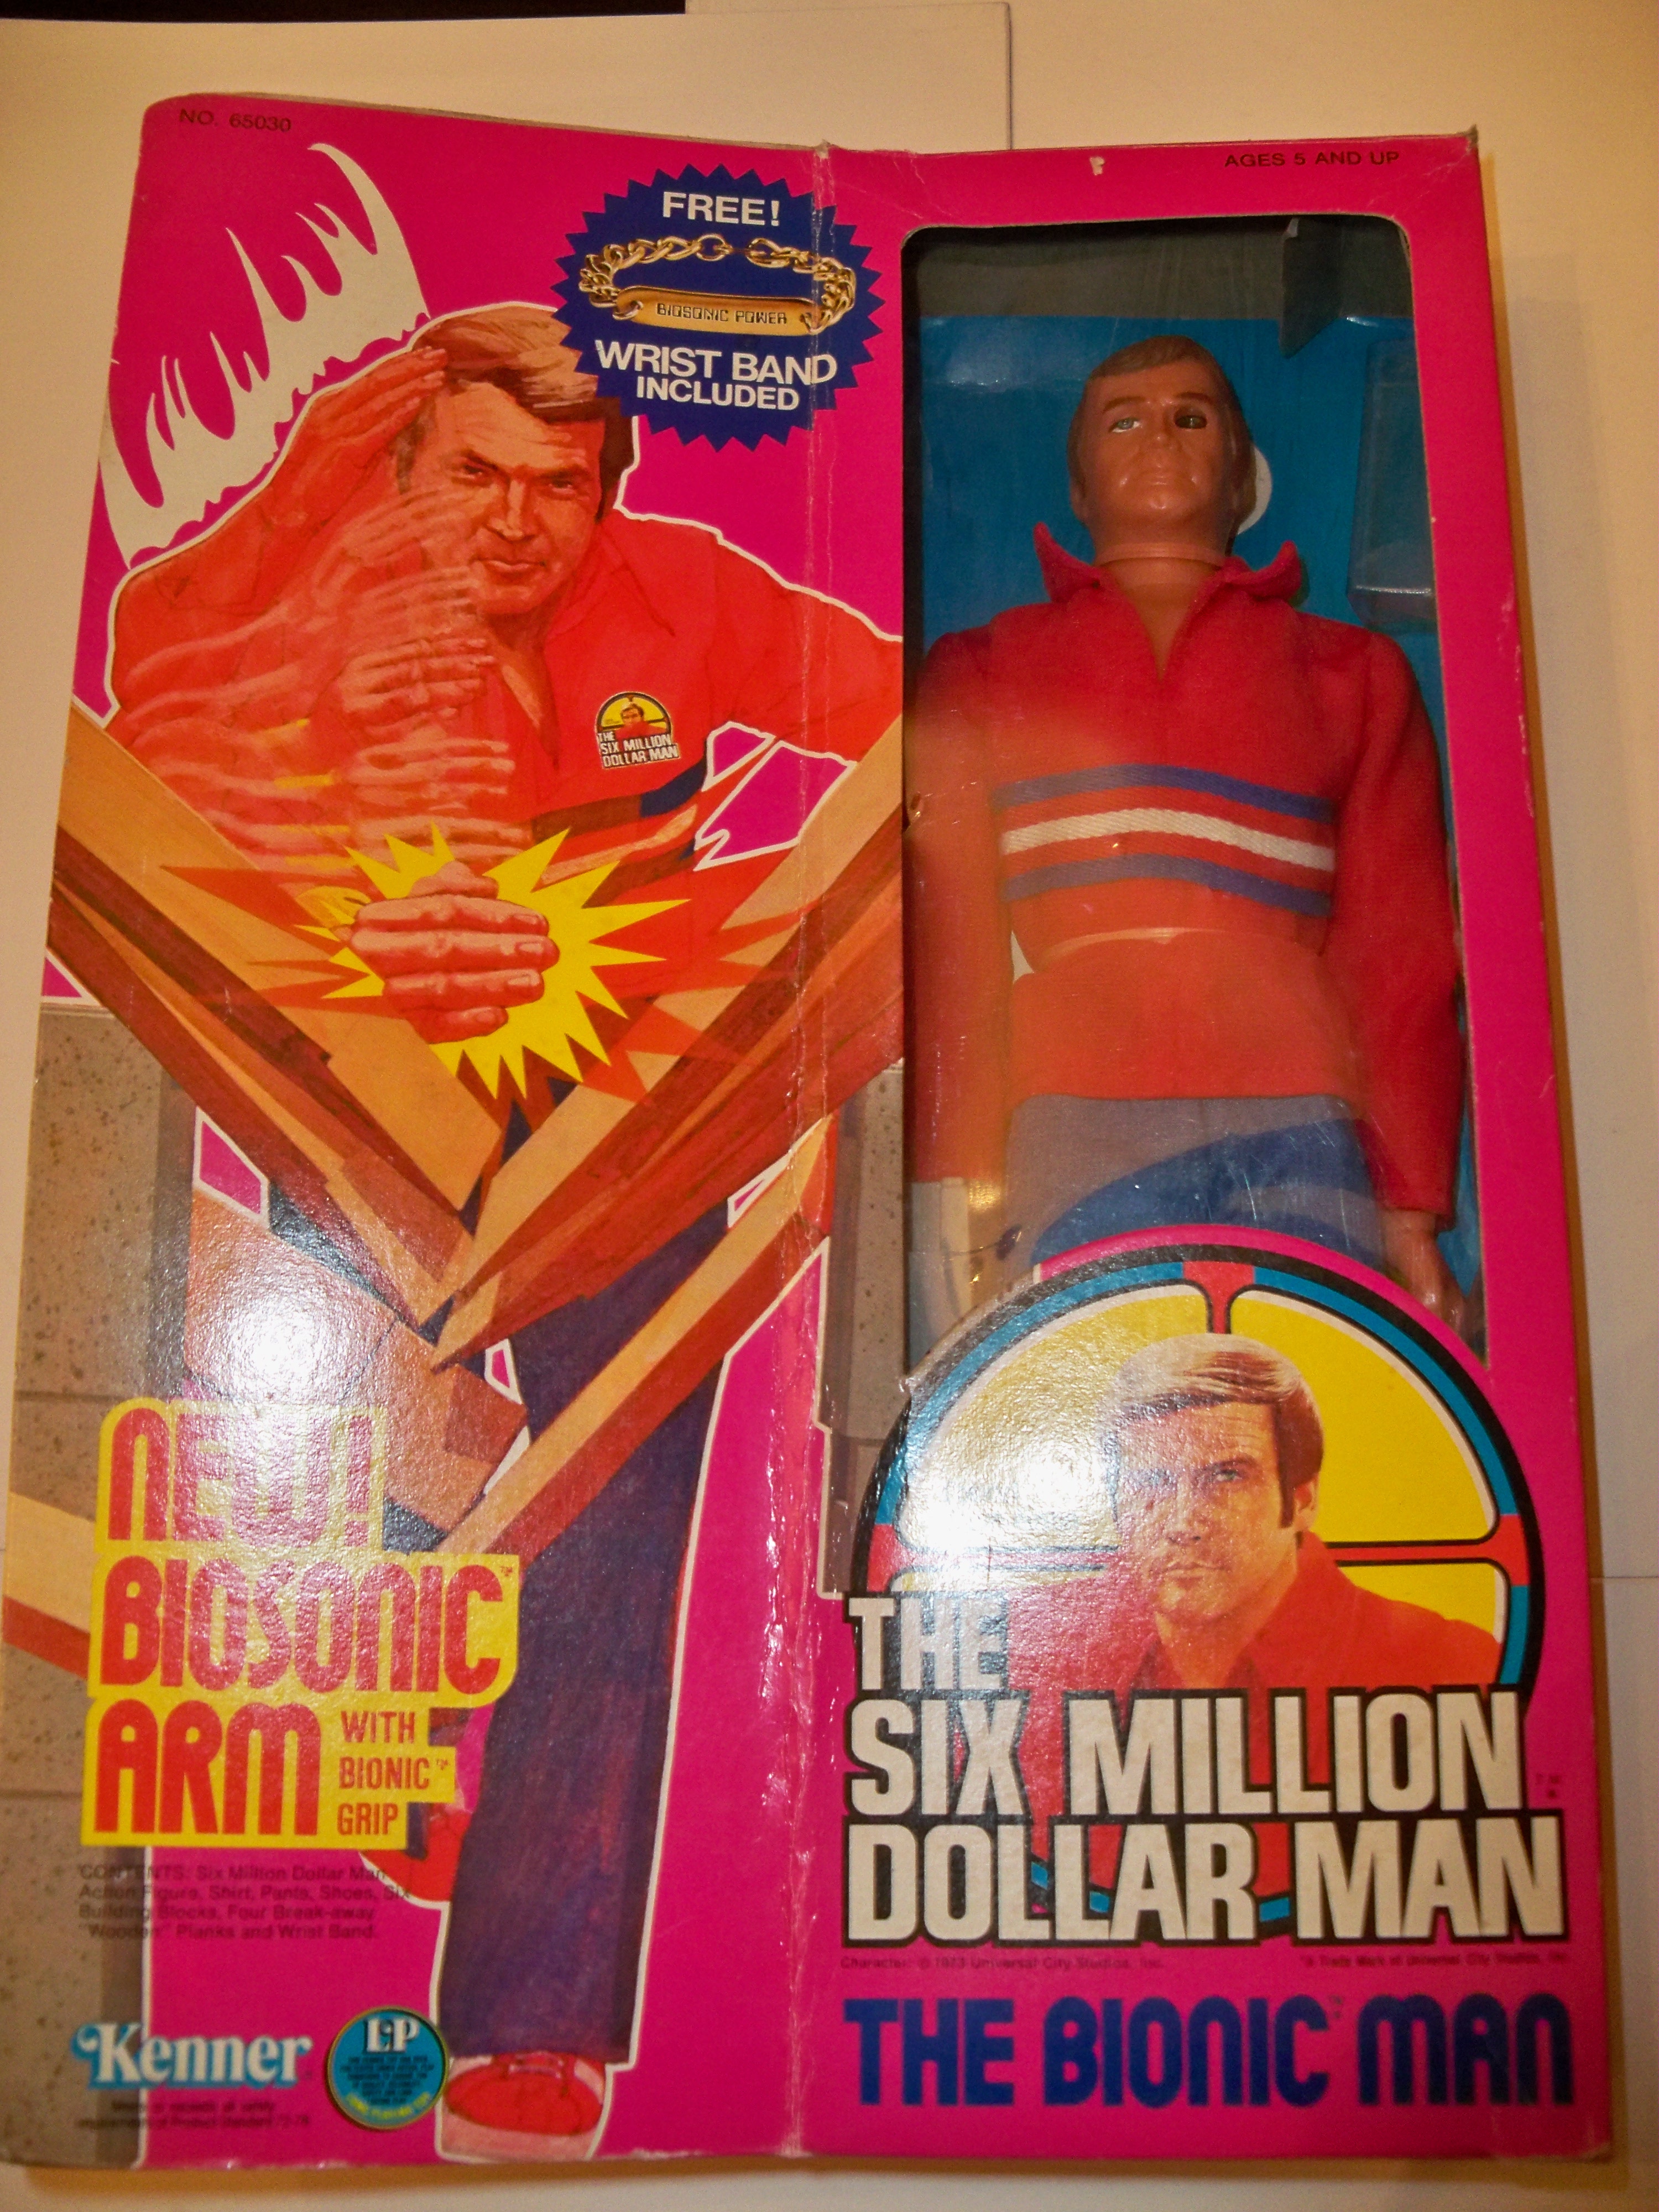 6 Million Dollar Man Kenner Bionic Woman Doll.